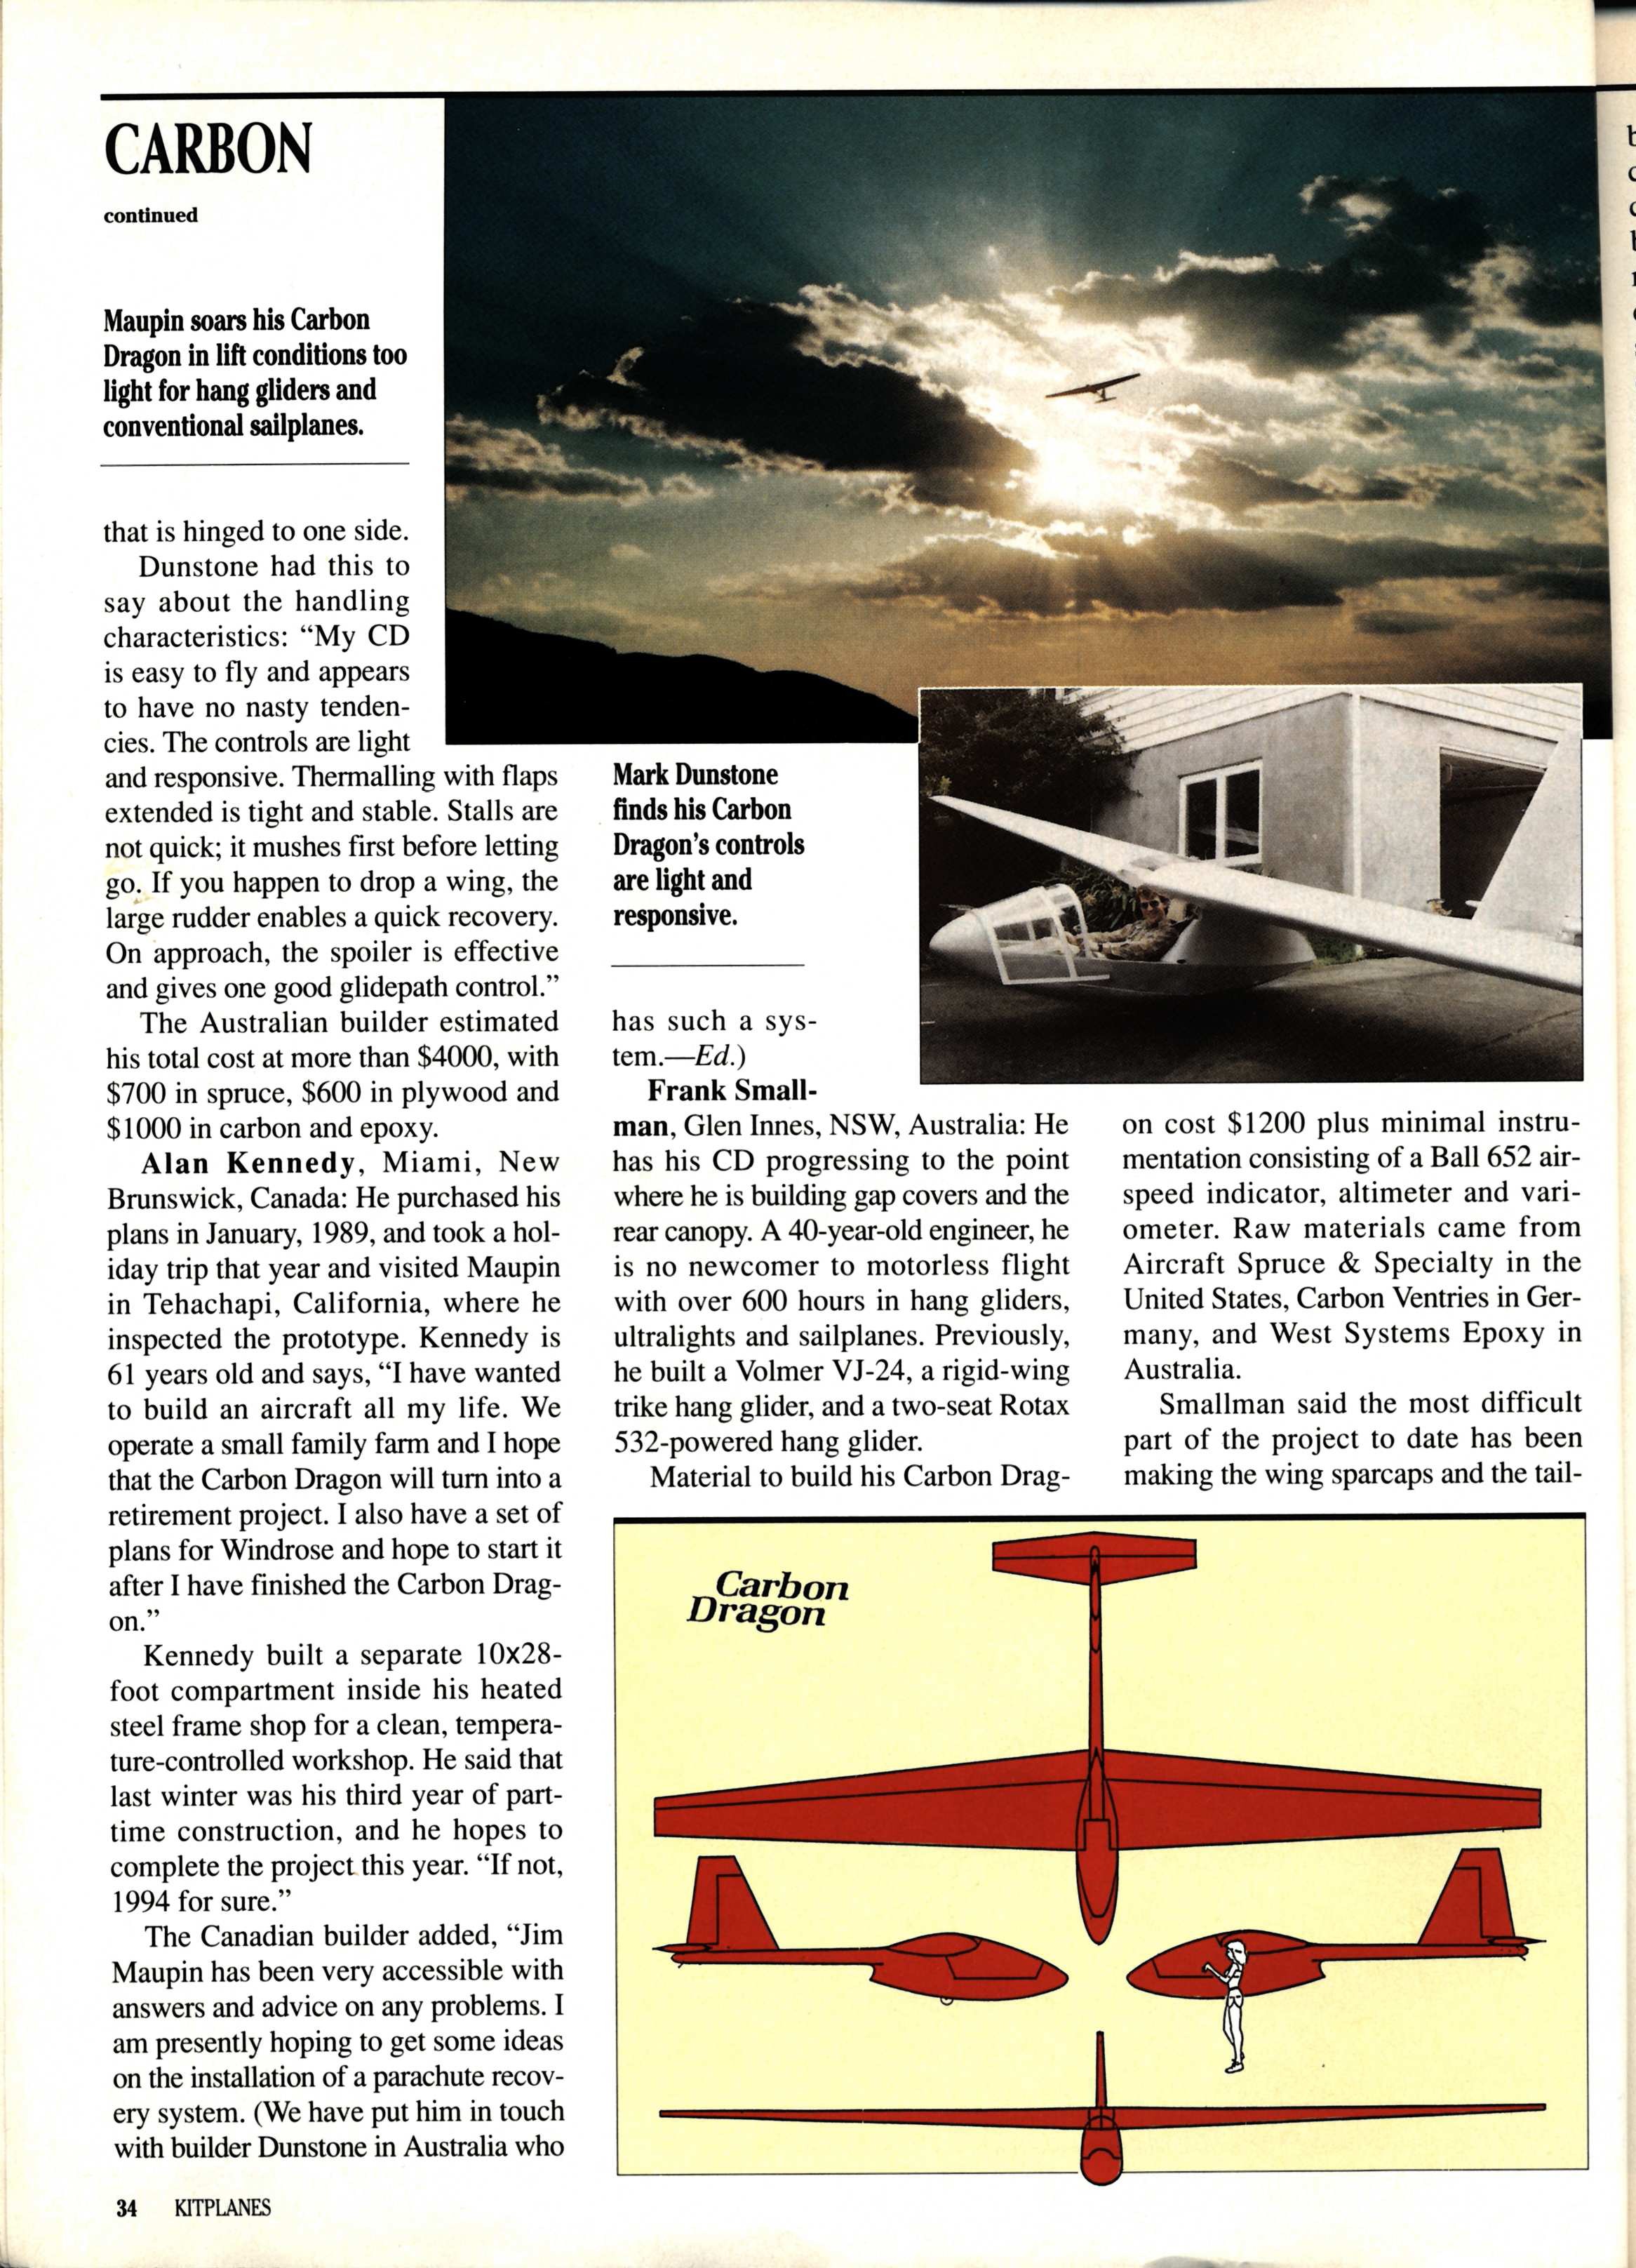 Kitplanes - page 6